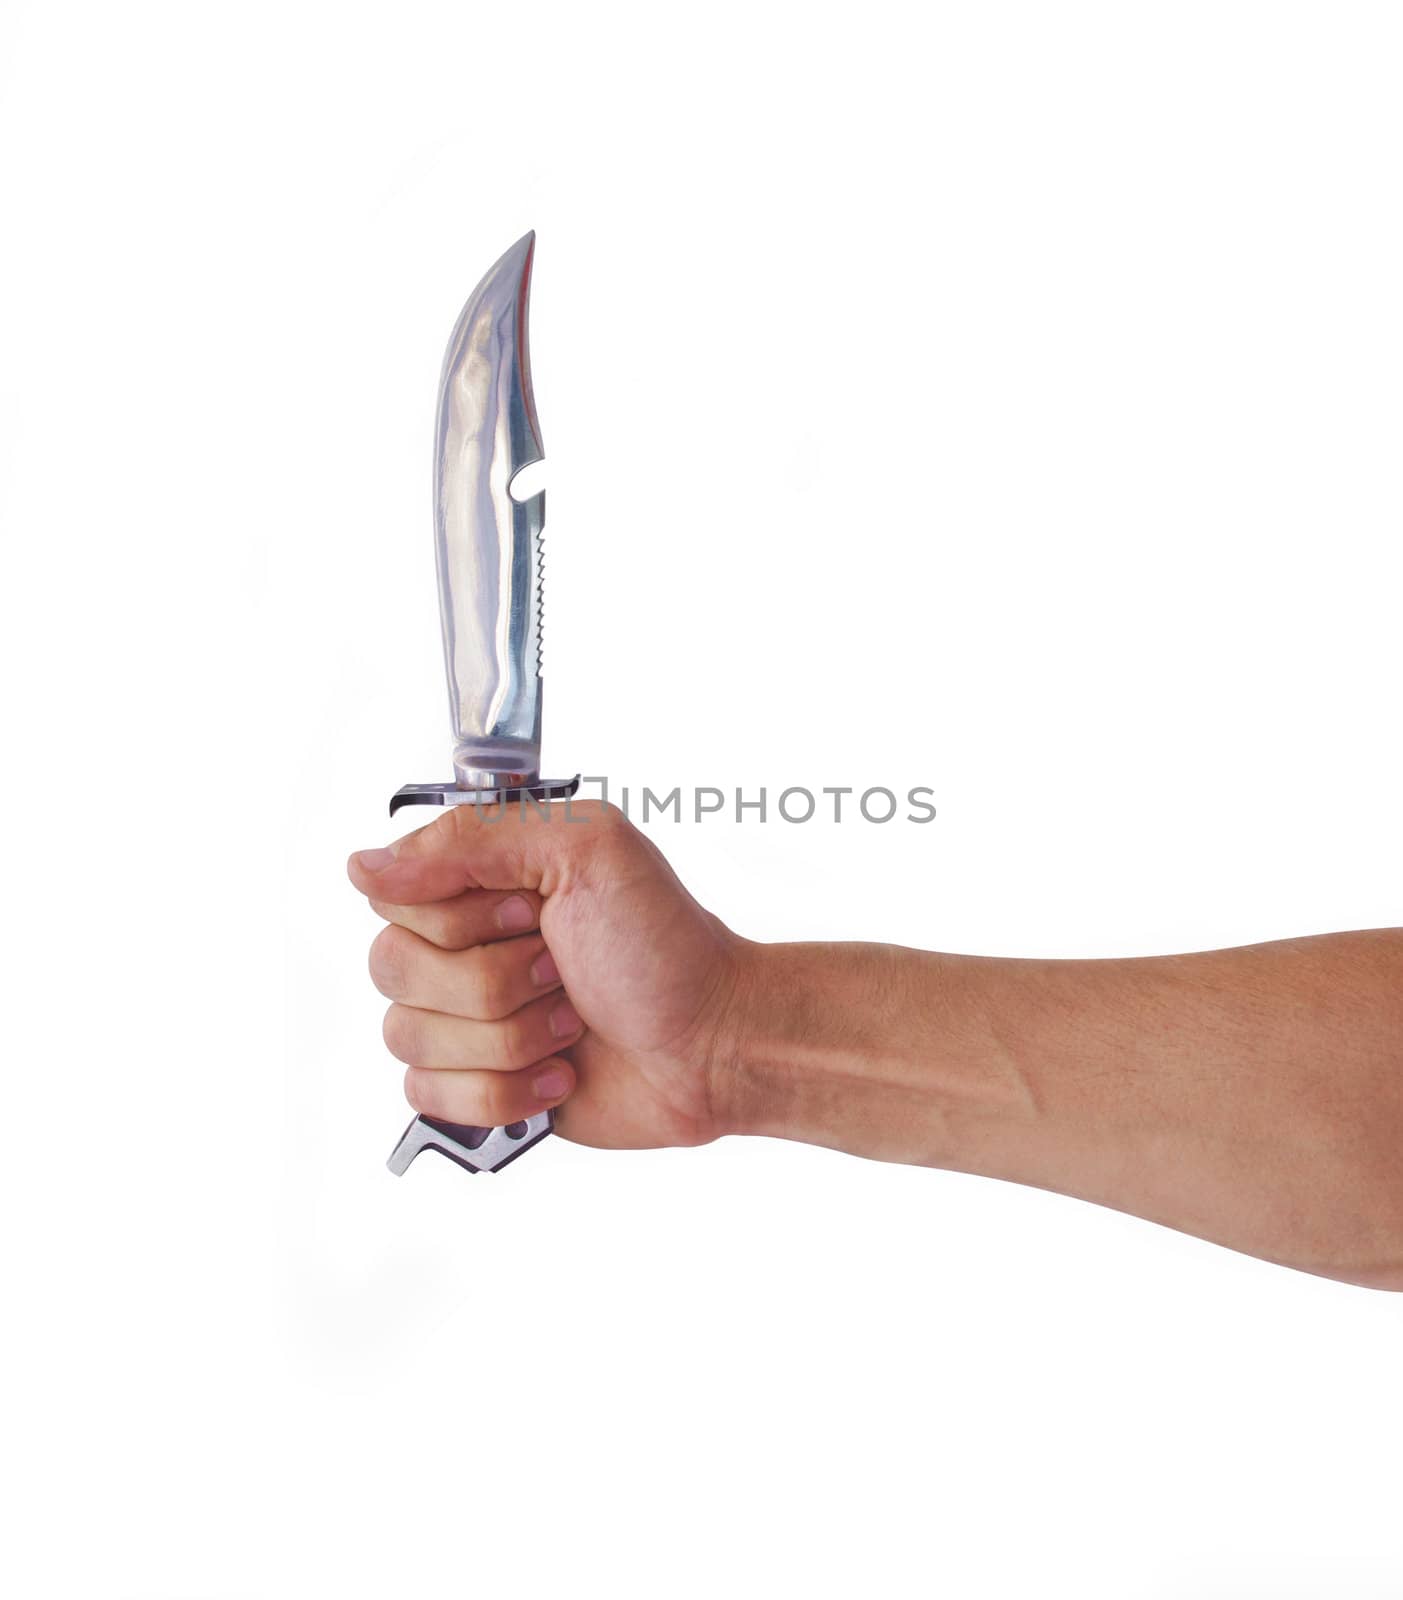 hand holding knife isolated